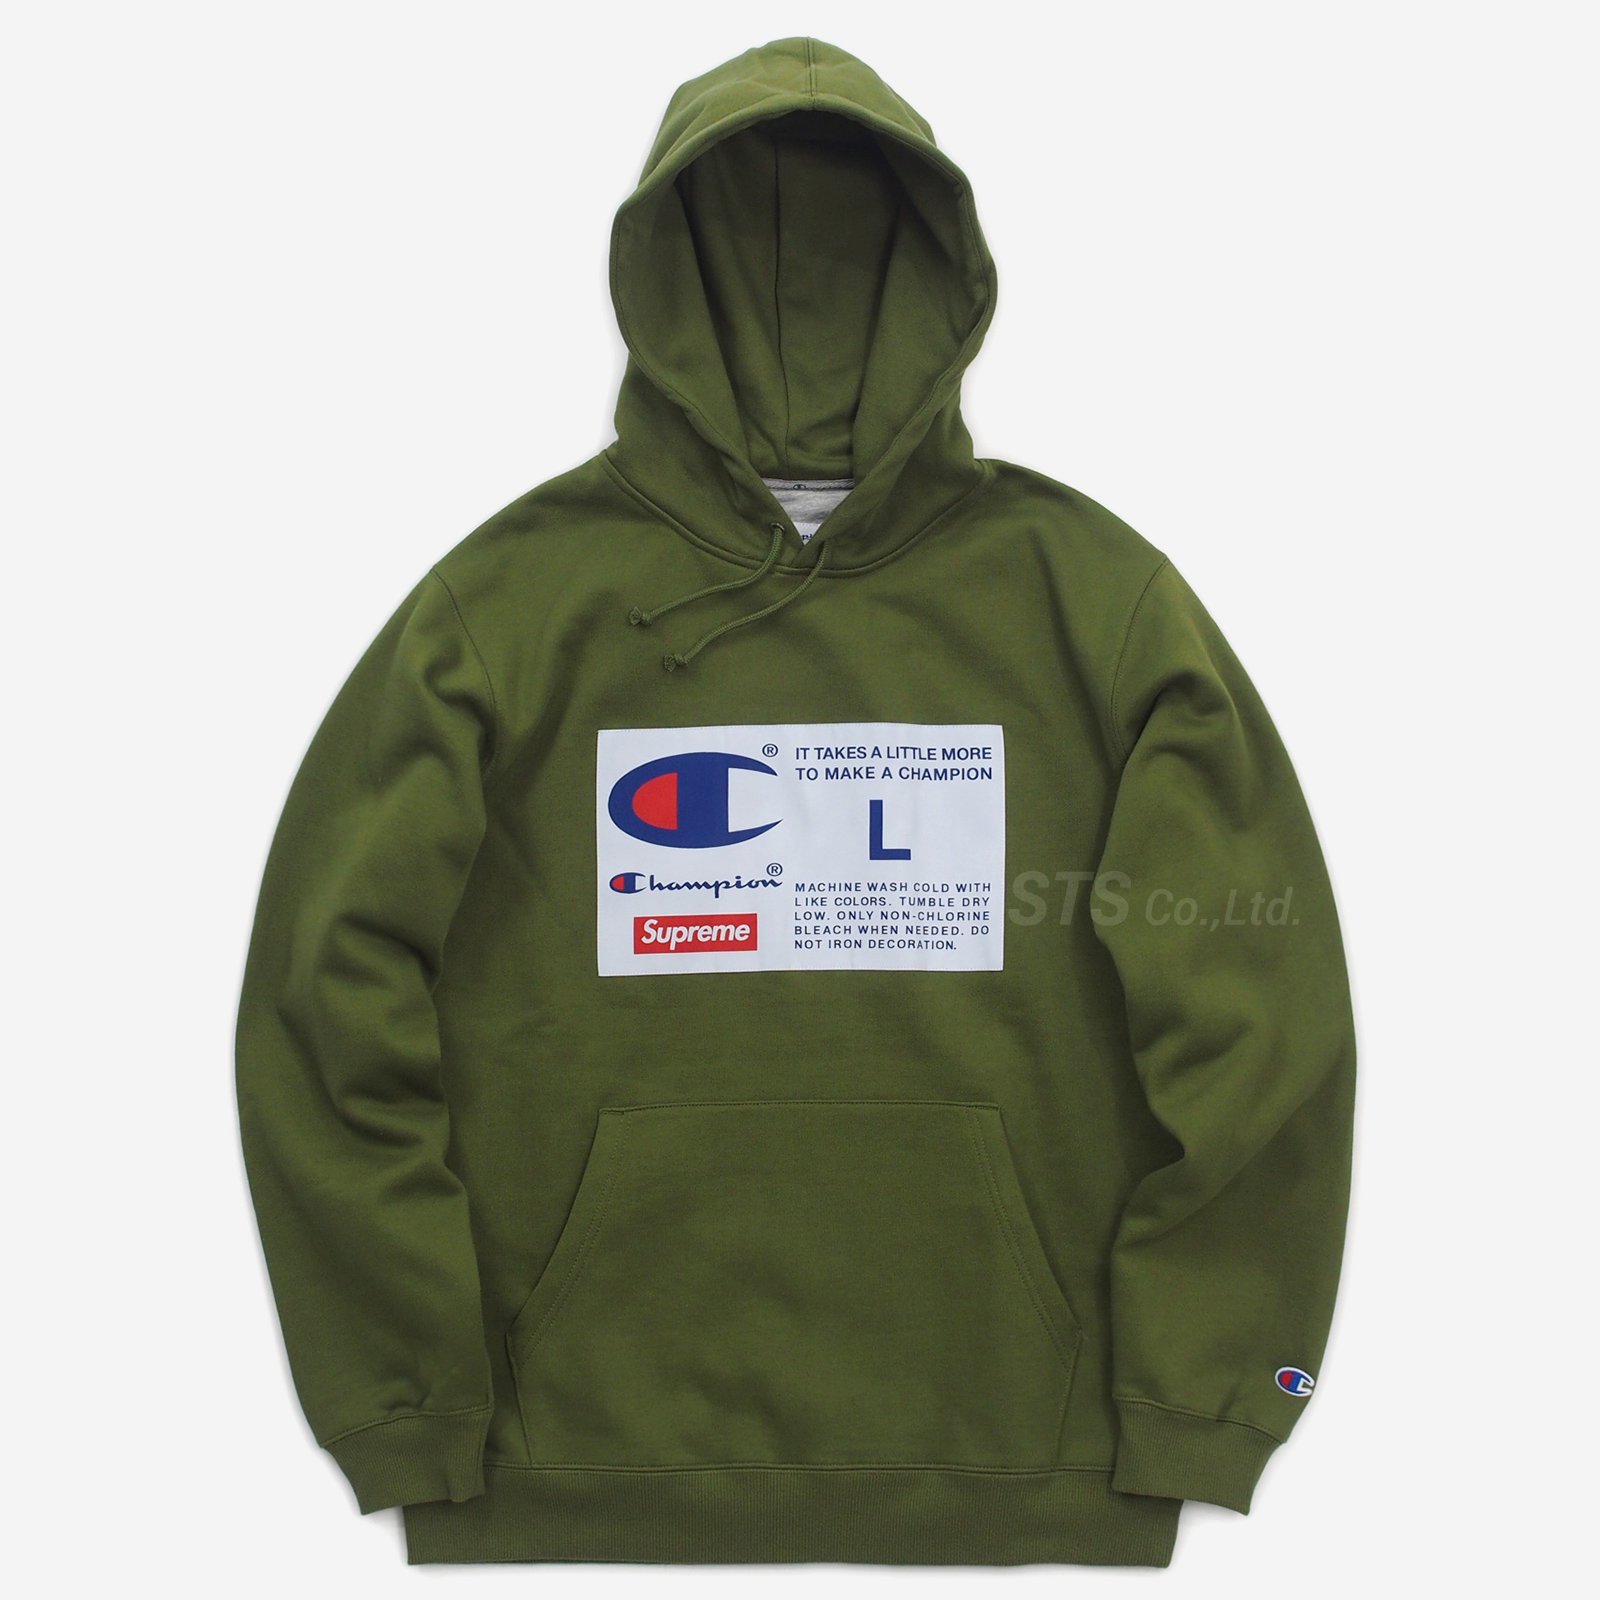 Supreme/Champion Label Hooded Sweatshirt - ParkSIDER